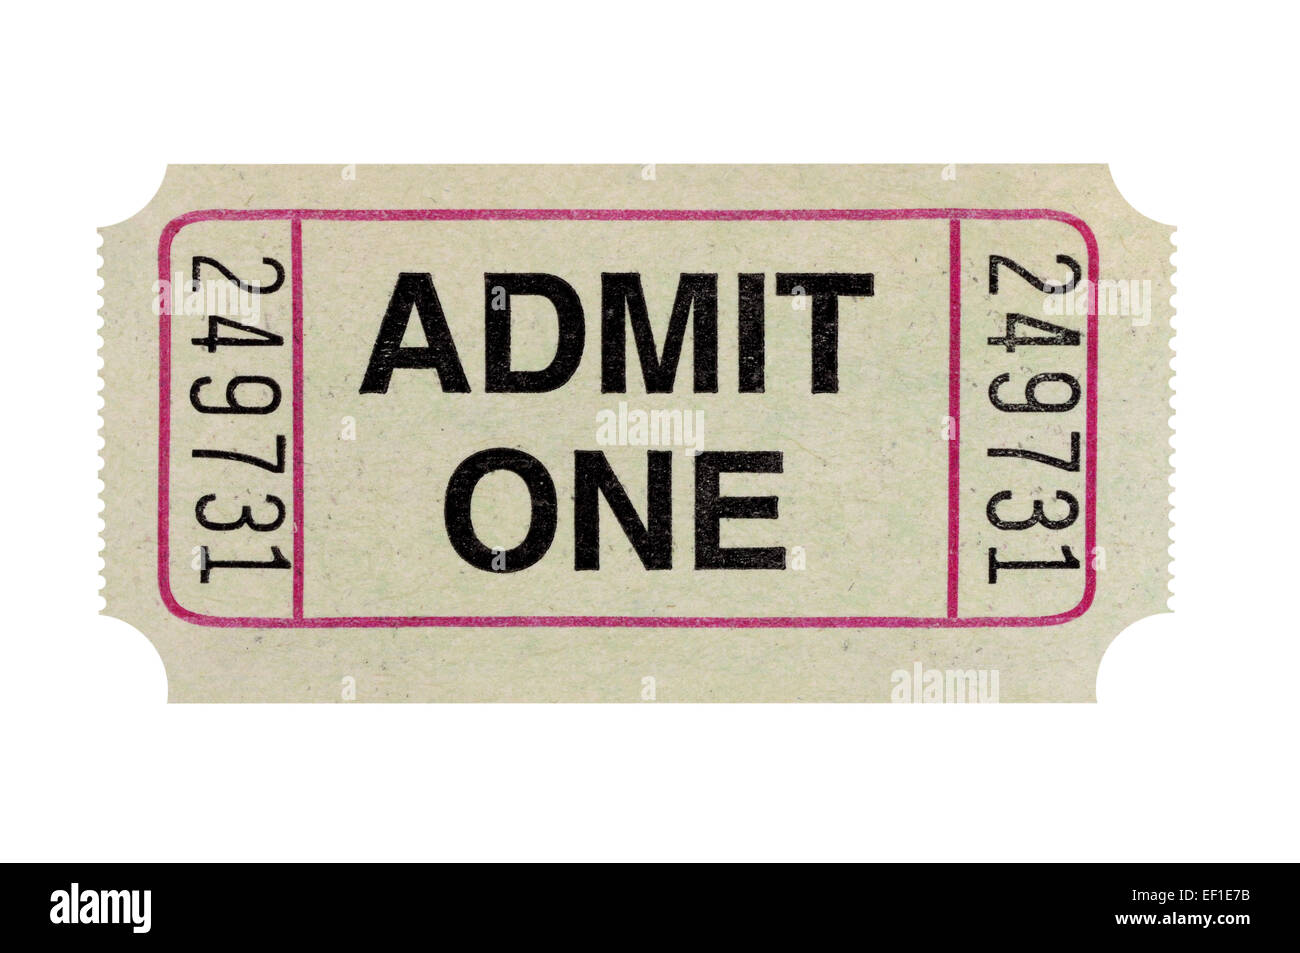 Admit one movie ticket isolated on white background. Stock Photo